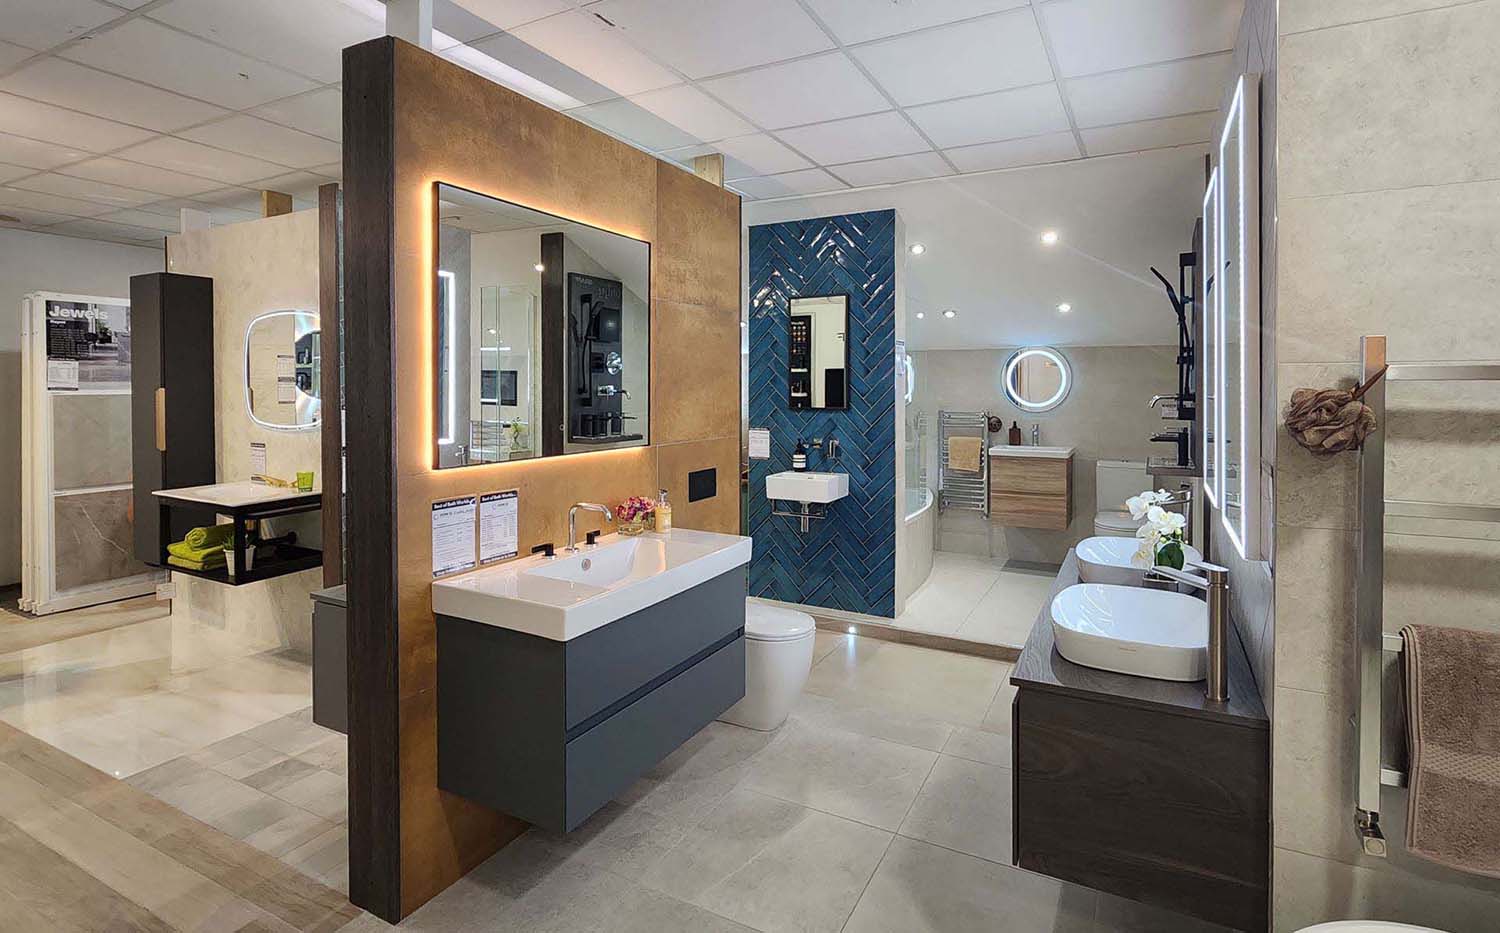 cheshire-tile-and-bathroom-basins